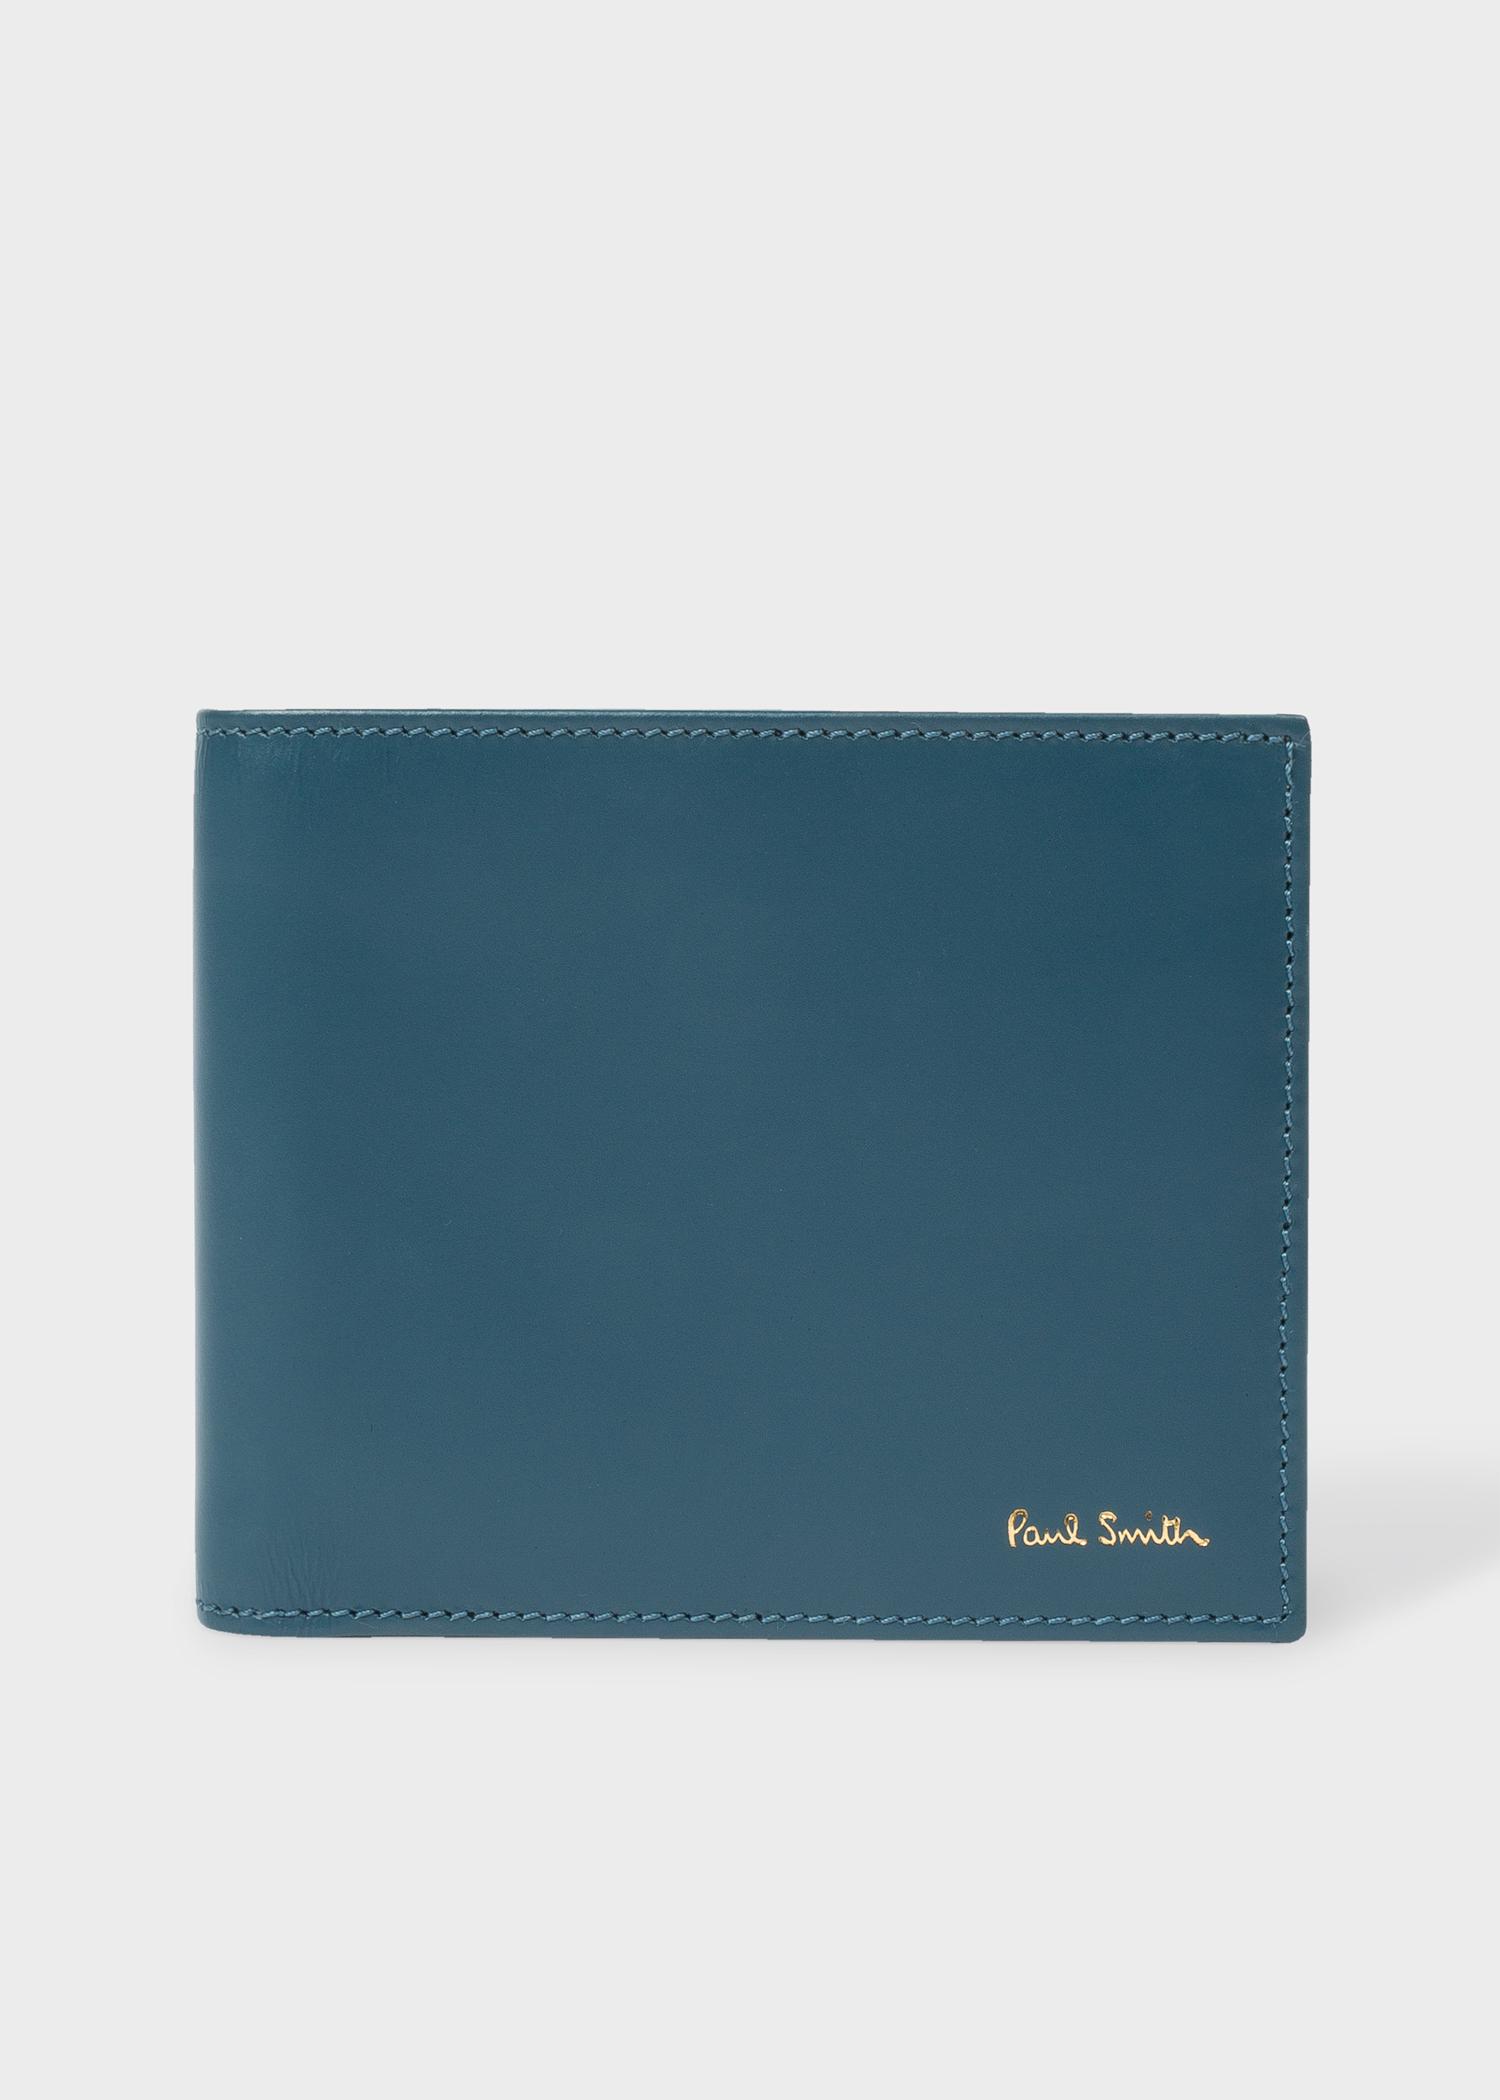 Paul Smith Teal Signature Stripe Interior Billfold Wallet for Men - Lyst